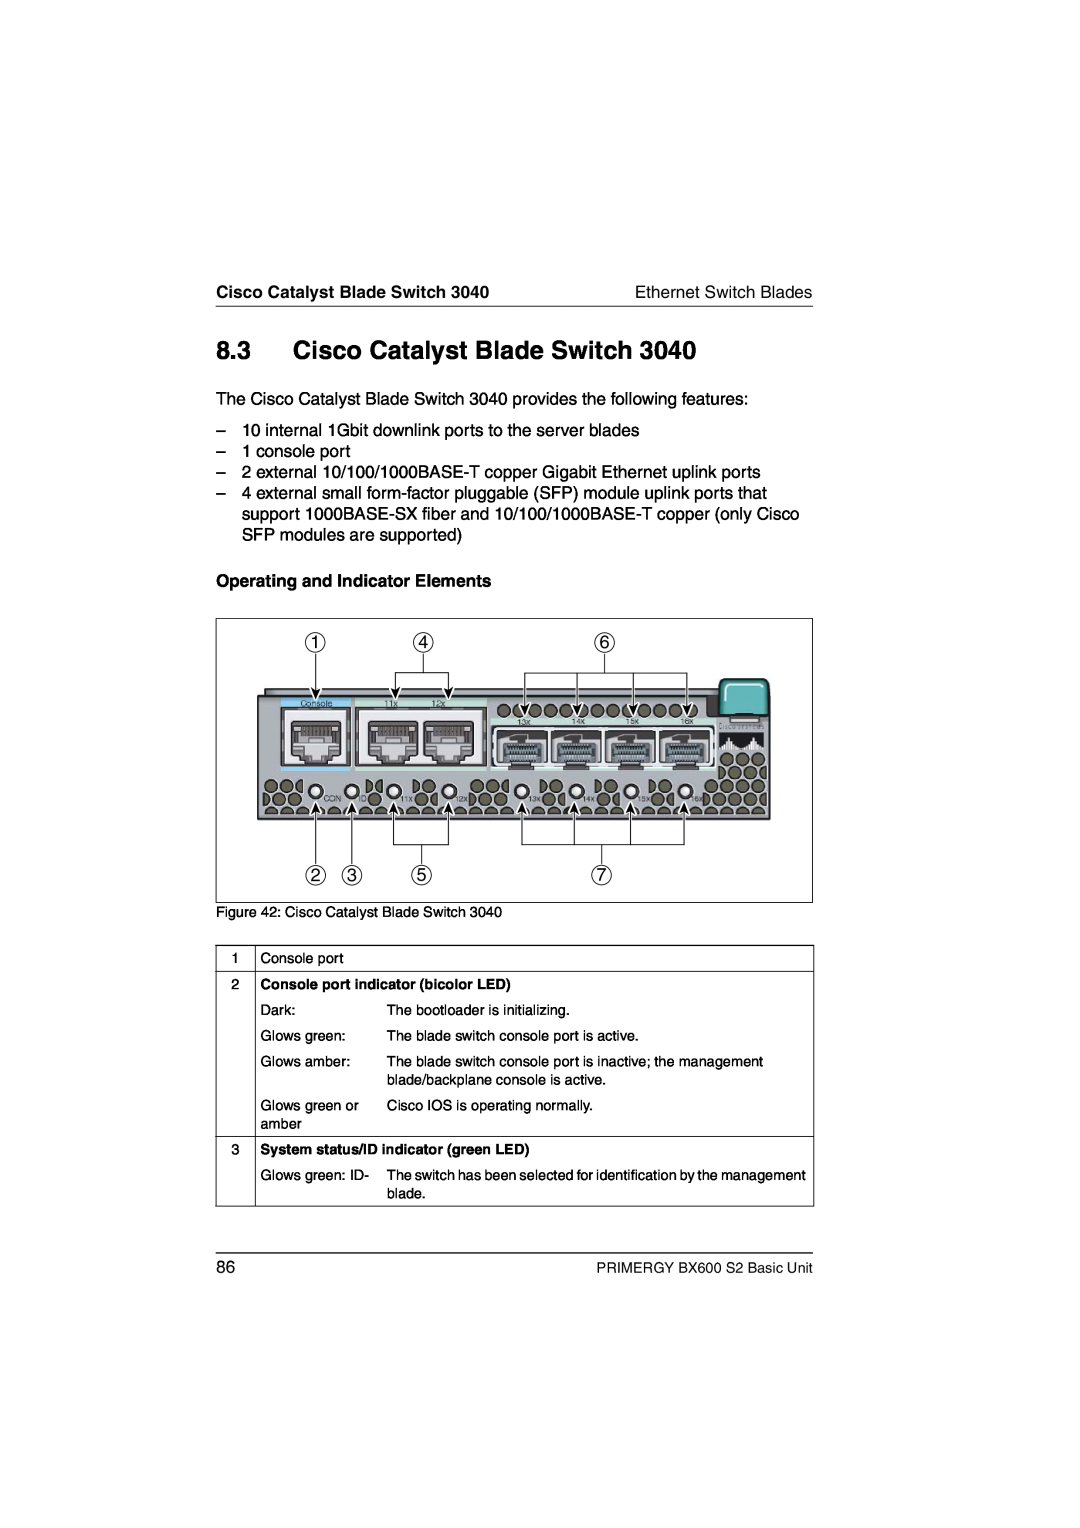 Fujitsu BX600 S2 manual Cisco Catalyst Blade Switch, Operating and Indicator Elements, Console port indicator bicolor LED 